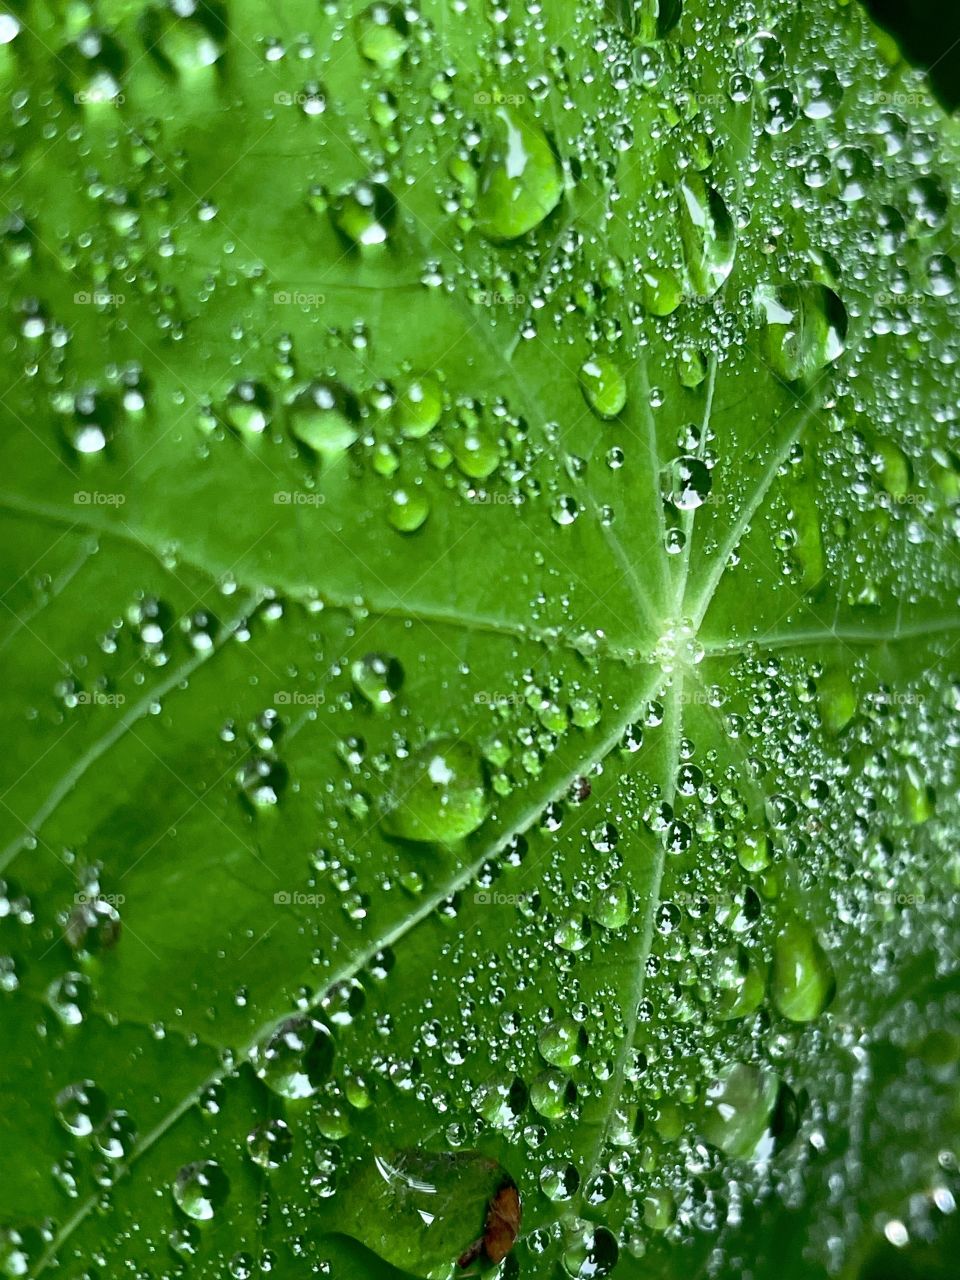 Droplets water drops rainfall leaf plant nature raindrops bubbles green downpour weather dewdrops